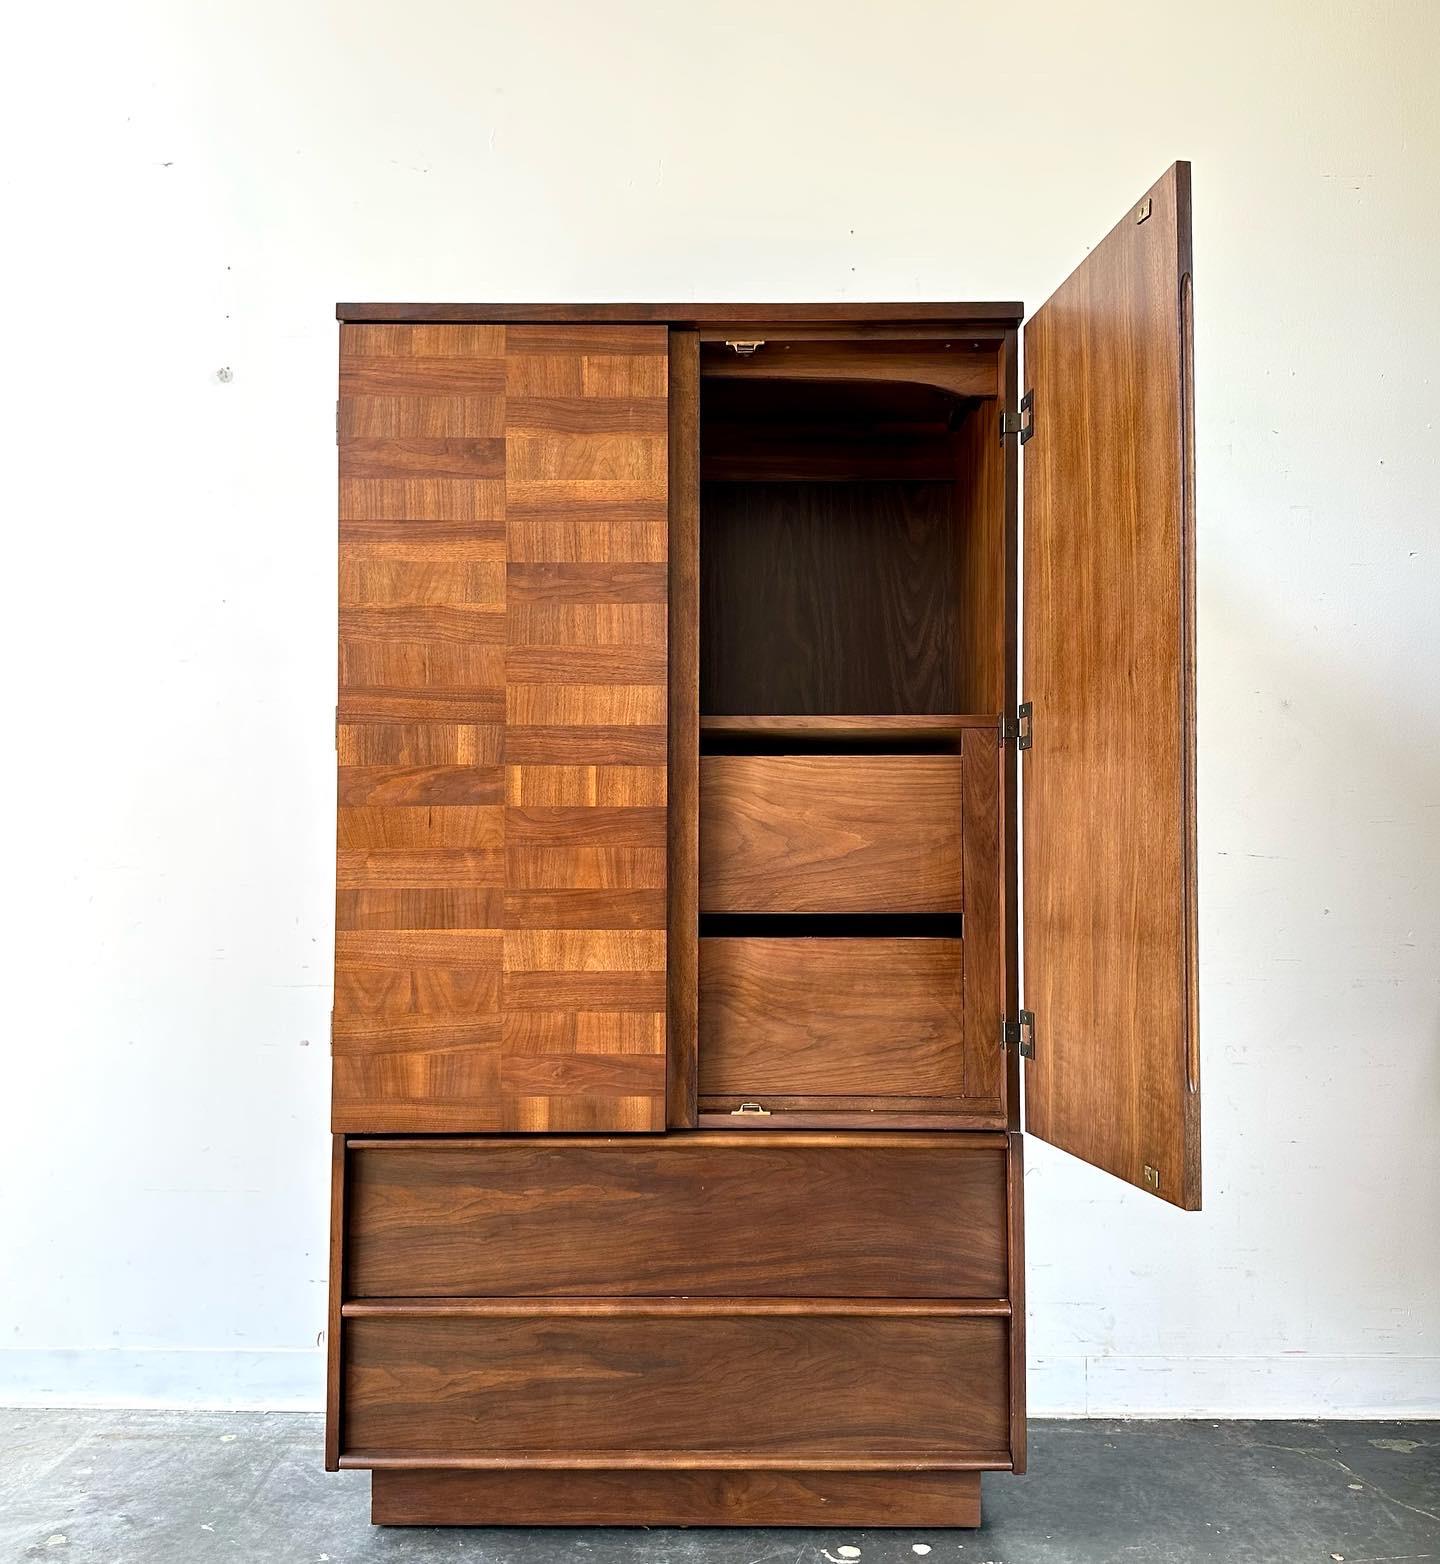 Bassett furniture gentlemen’s chest

Fantastic walnut brutalist style cabinet.
Loads of storage space with gorgeous wood grain pattern.

Very minimal age appropriate wear.

Dimensions:

38” W 
18” D
68” H 